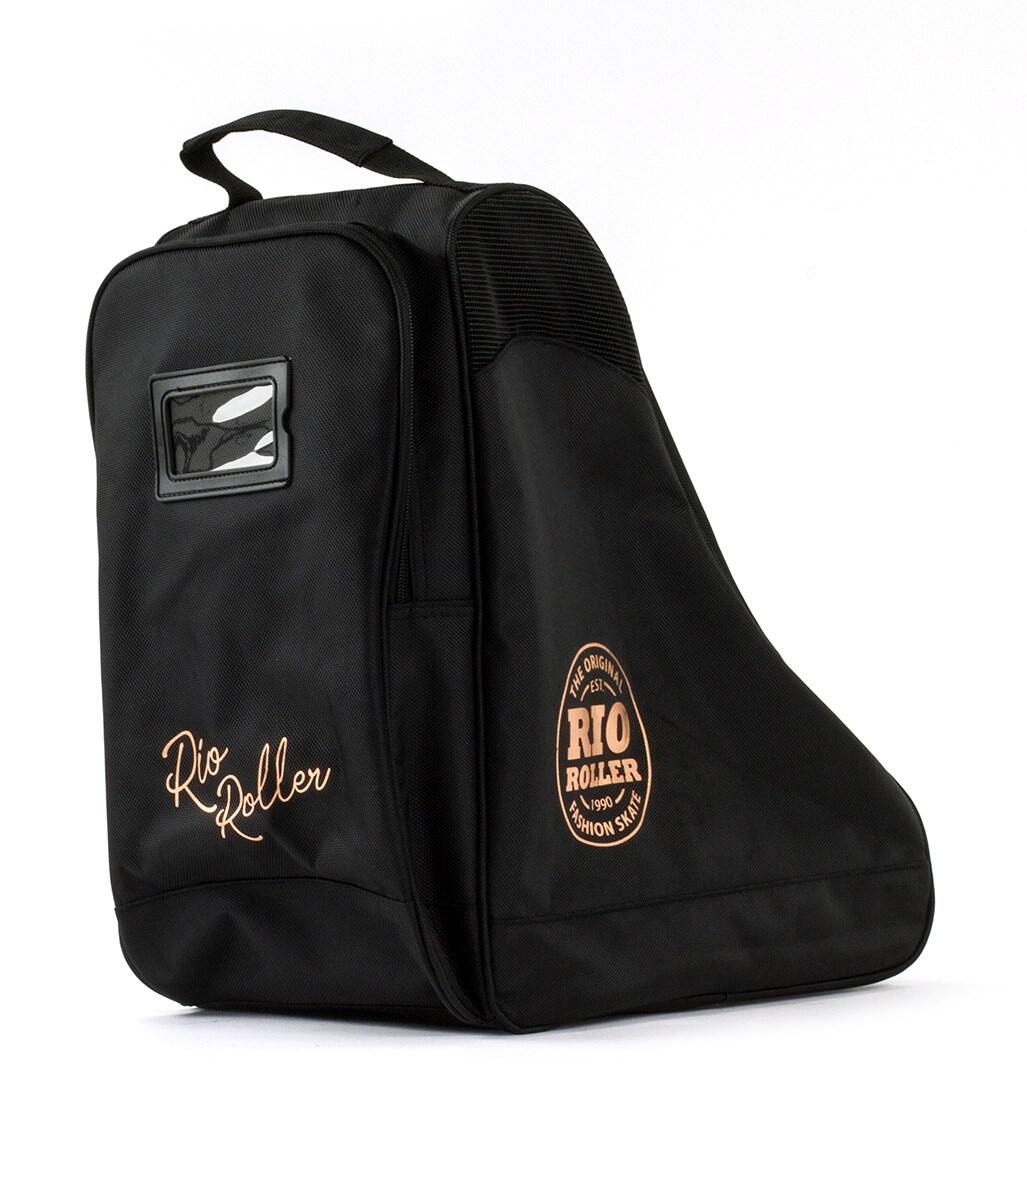 Rose Gold Ice/Roller Skate Carry Bag - Black - Size: One Size 3/3